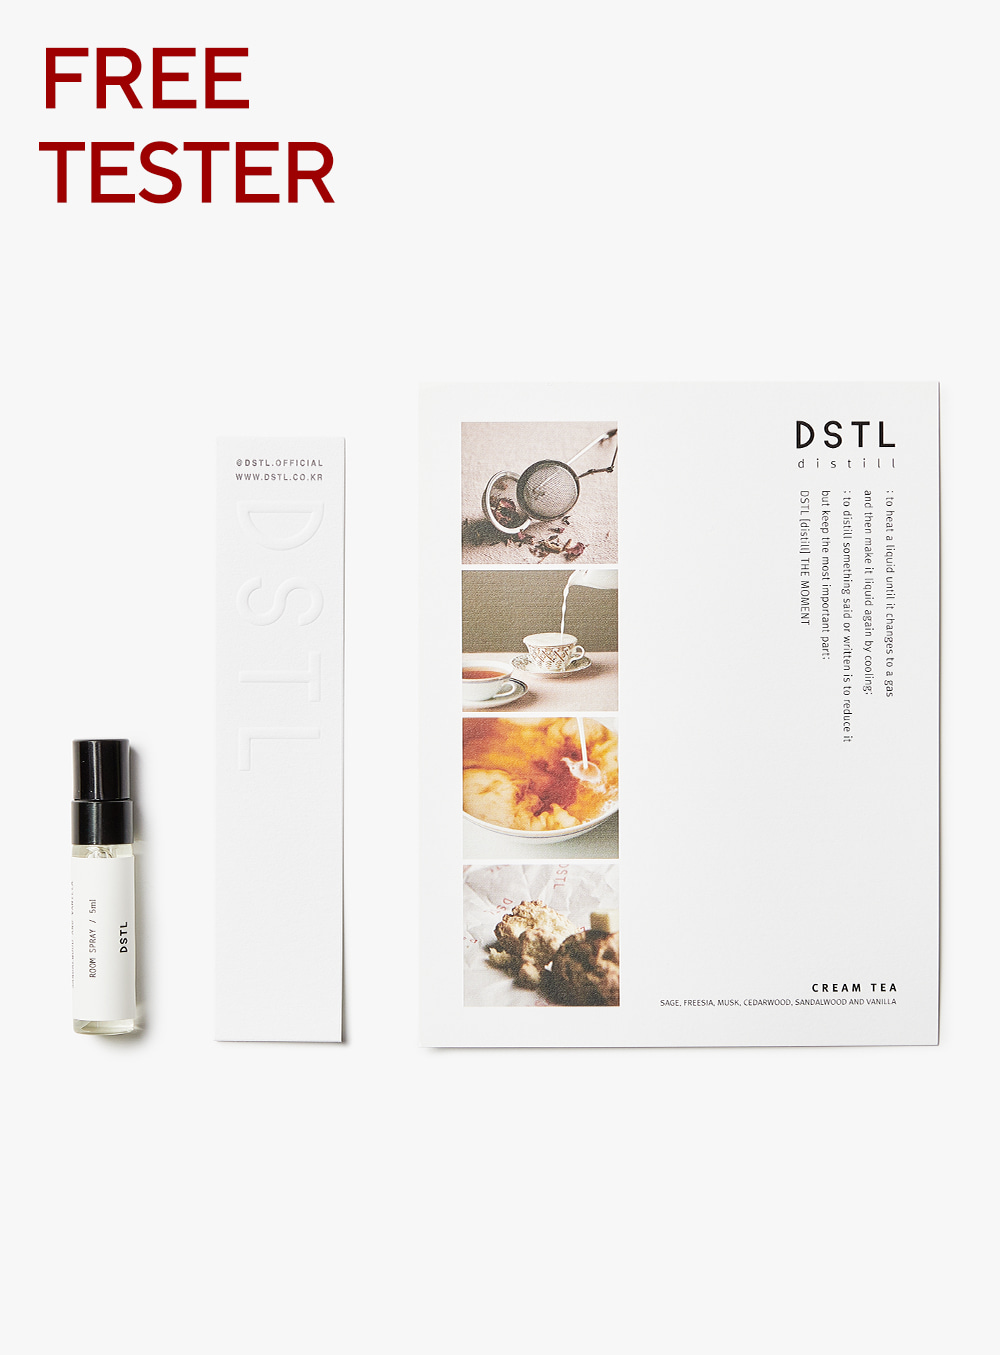 DSTL - DSTL Diffuser 4 Scents Tester